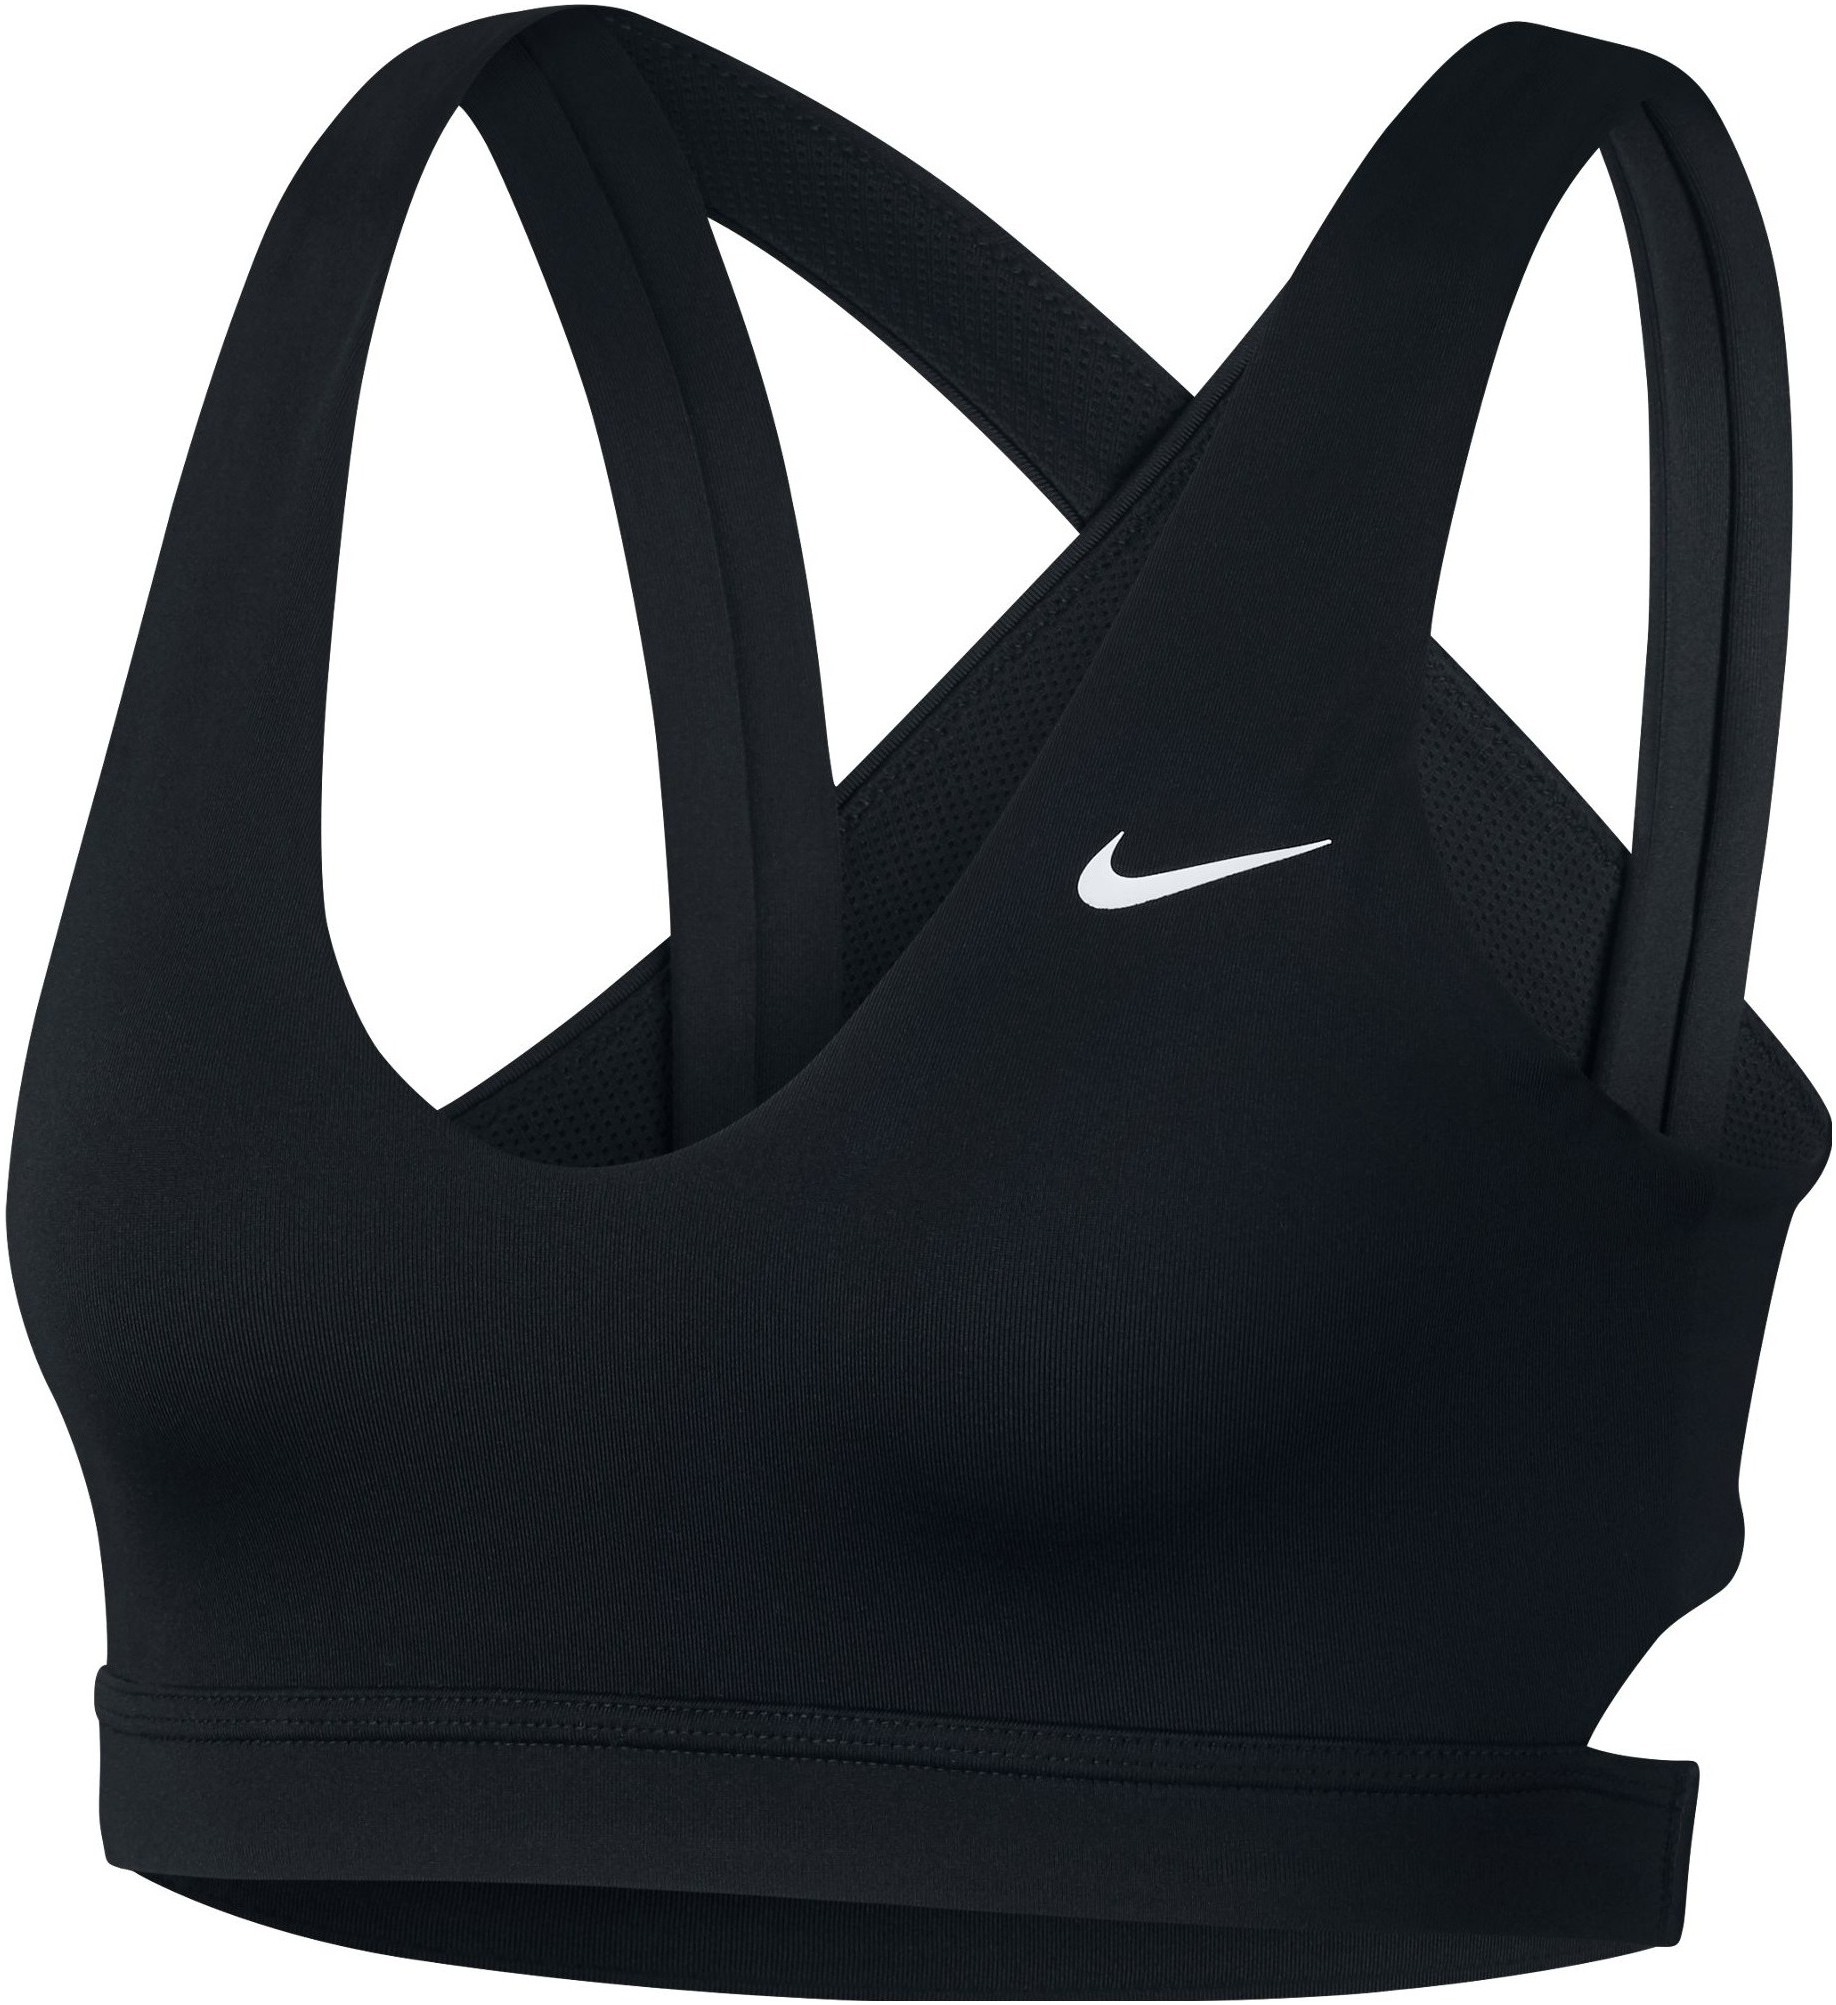 Nike Sports bra INDY in black/ gray